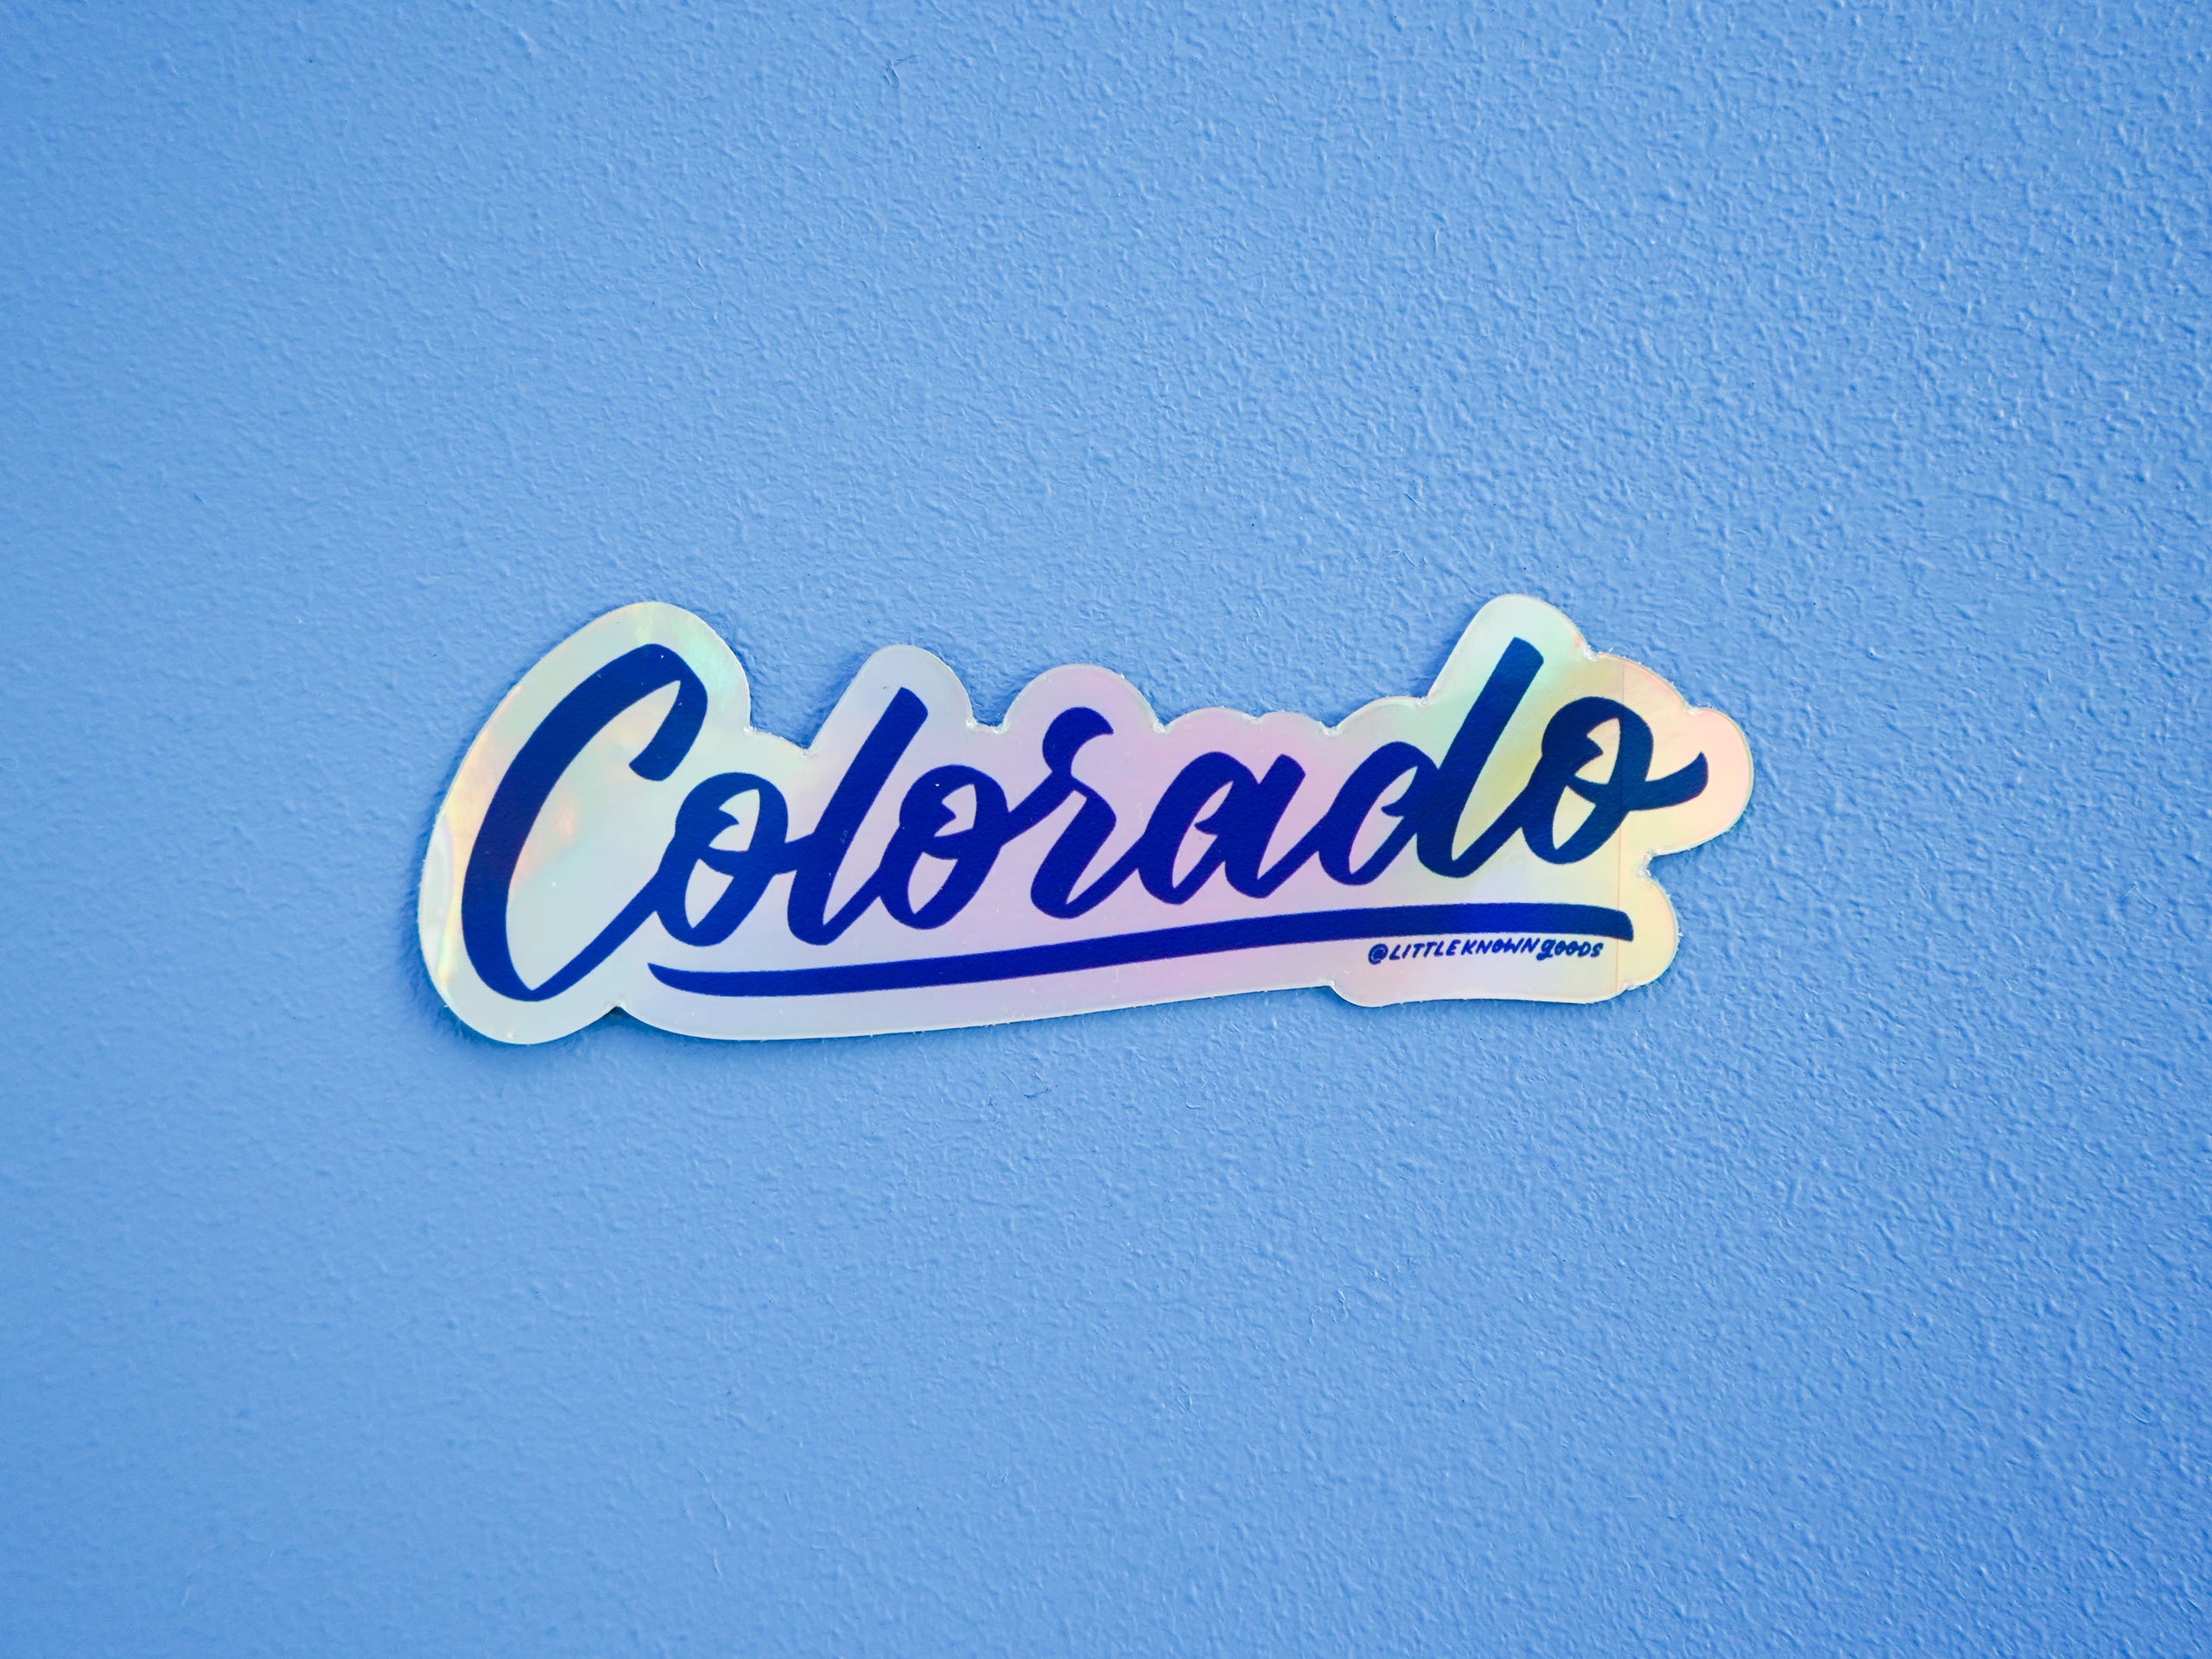 Colorado Holographic Sticker